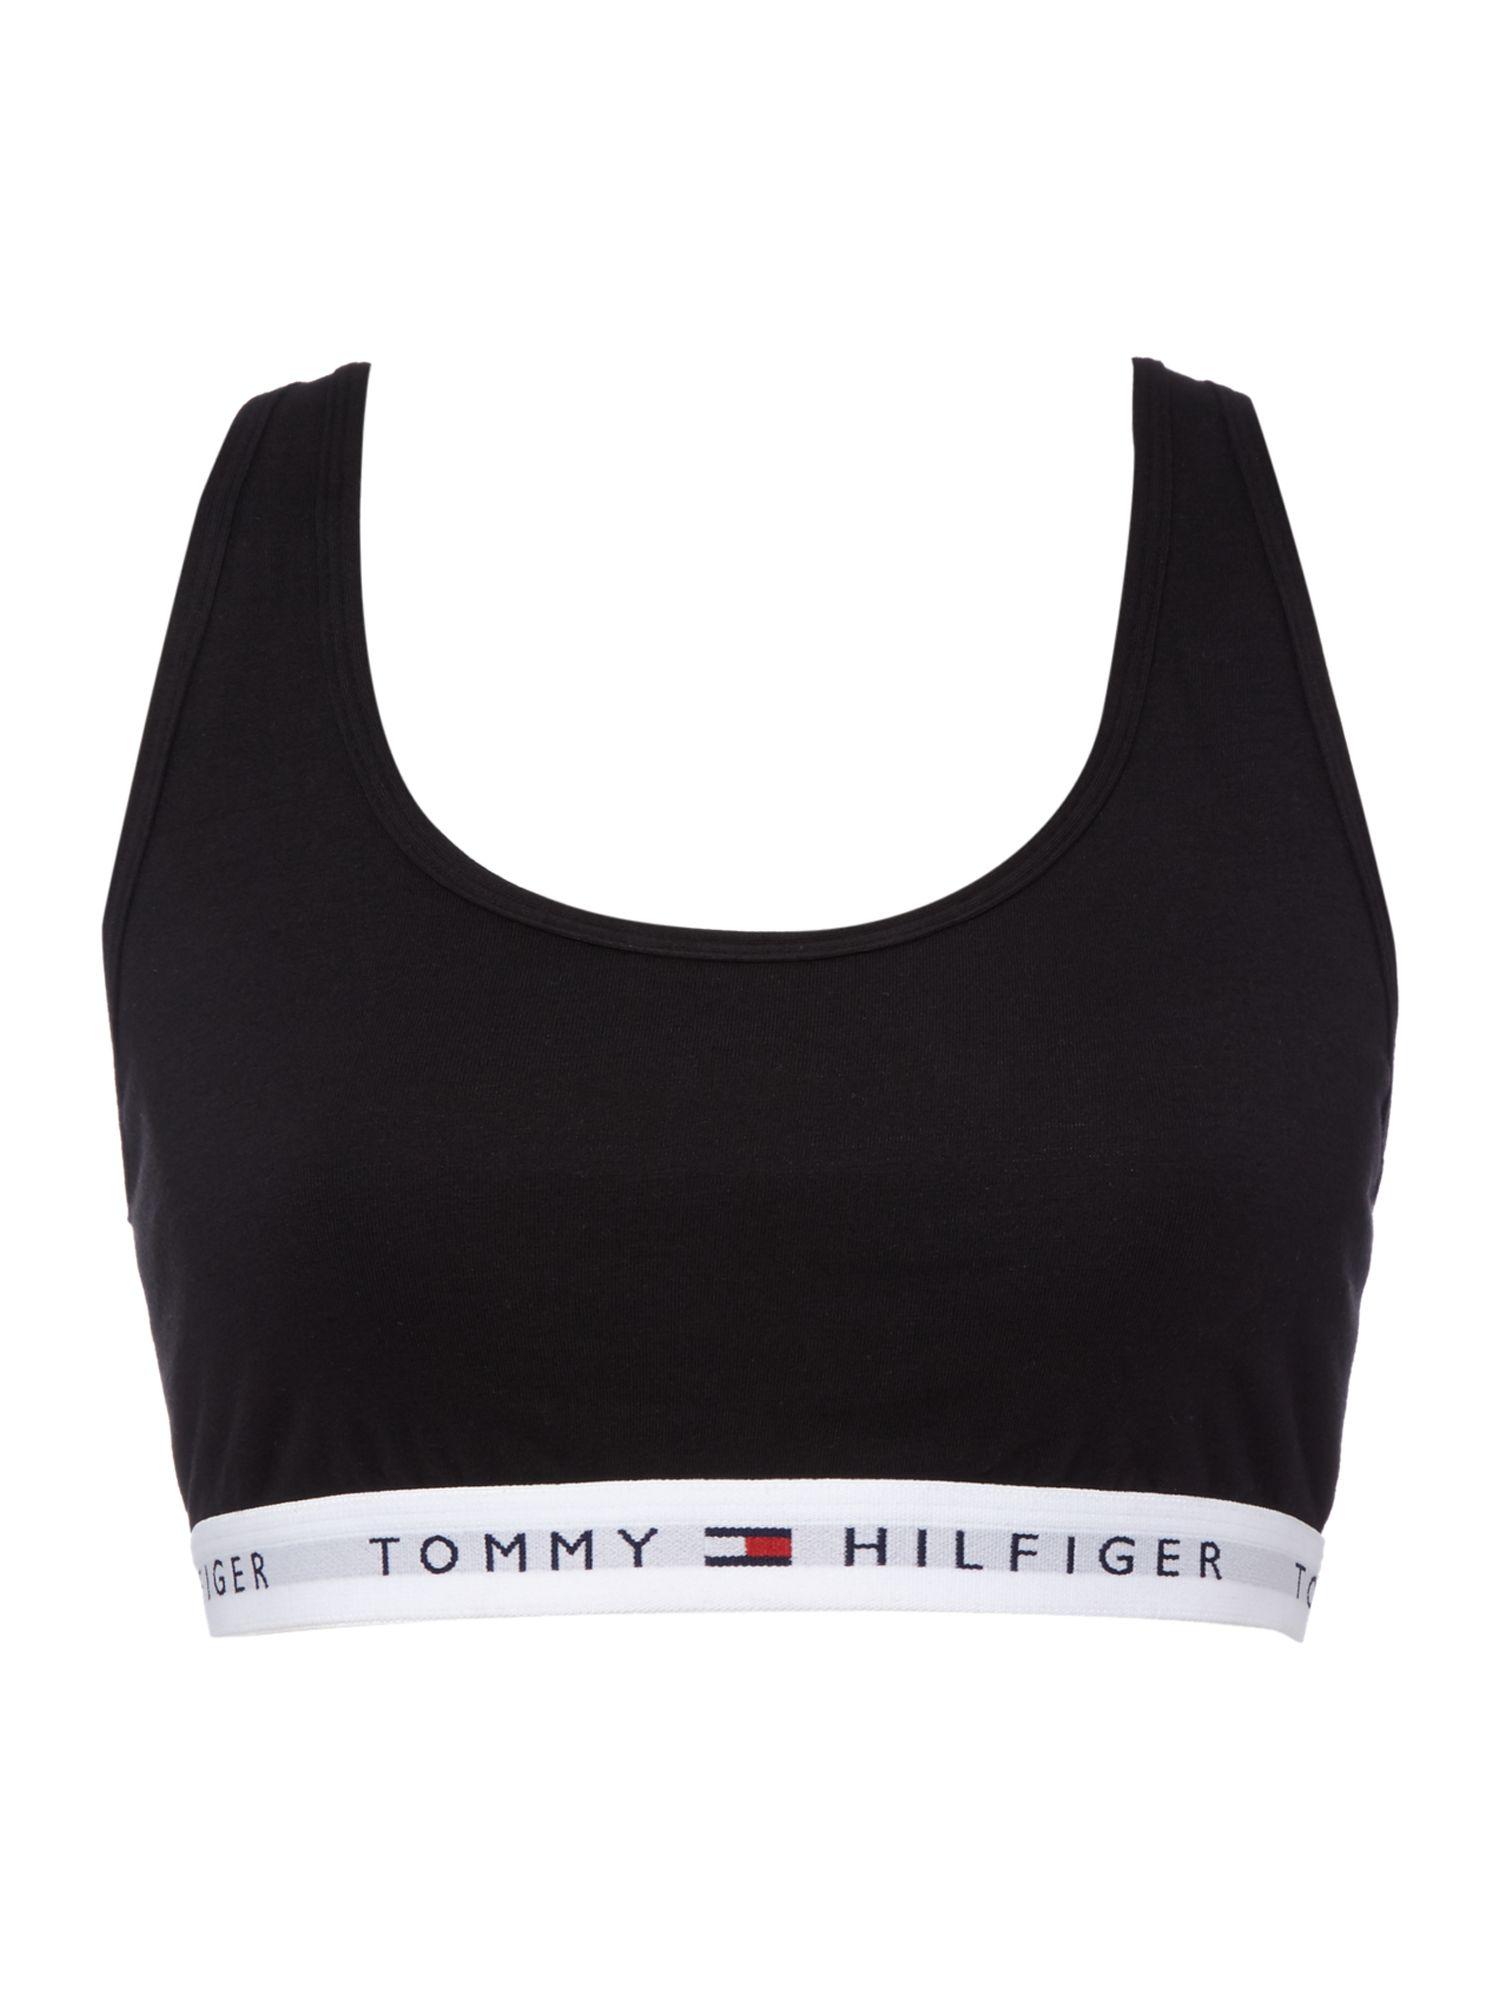 Lyst - Tommy hilfiger Logo Crop Top in Black1500 x 2000